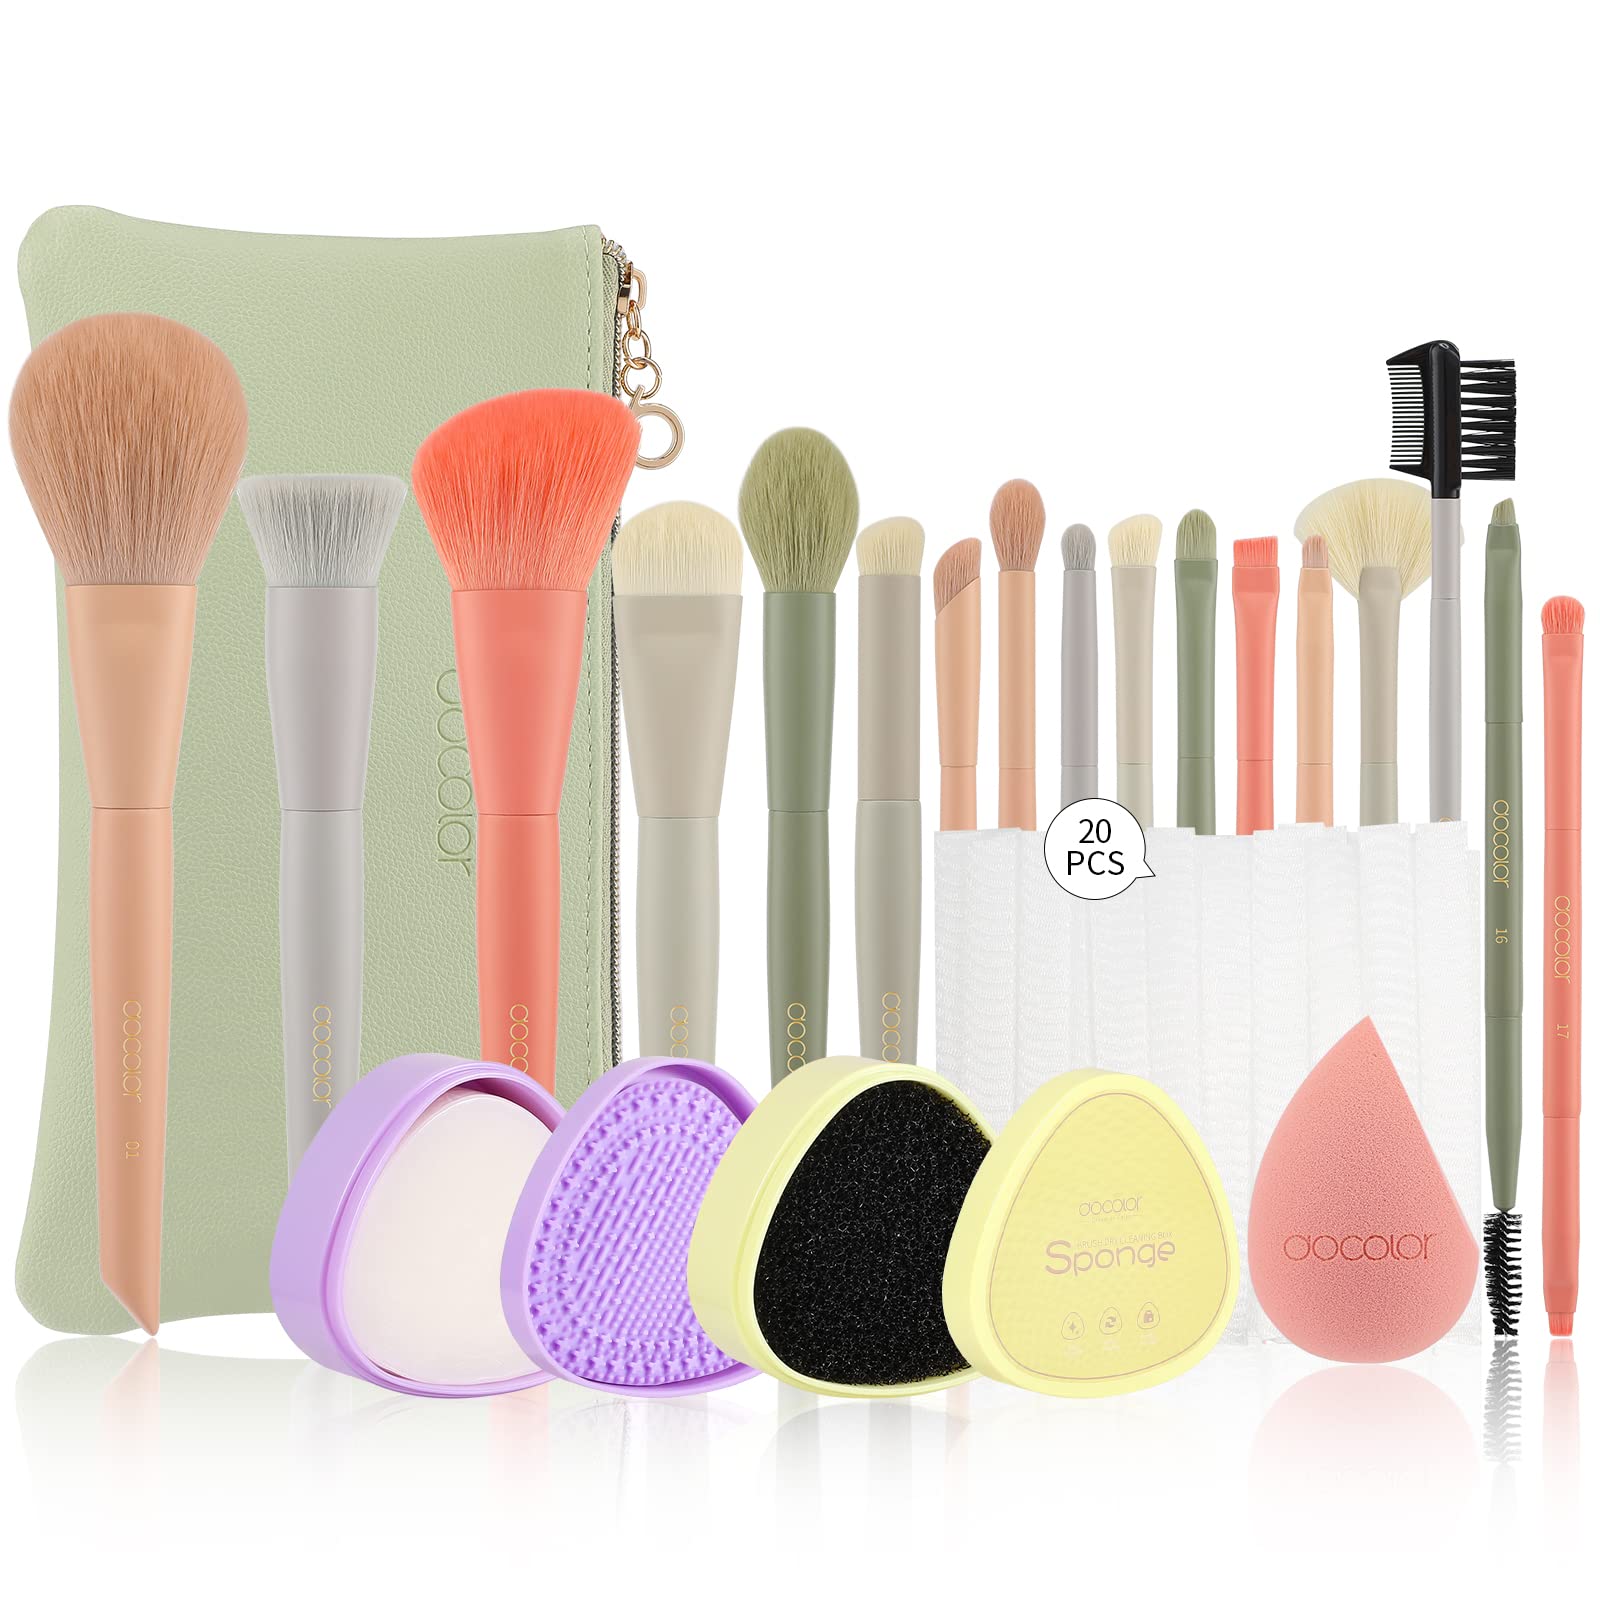 Docolor 17Pcs Morandi Makeup Brush Set with Makeup Bag and Makeup Sponge and Brush Protector + Makeup Brushes Cleaner Set